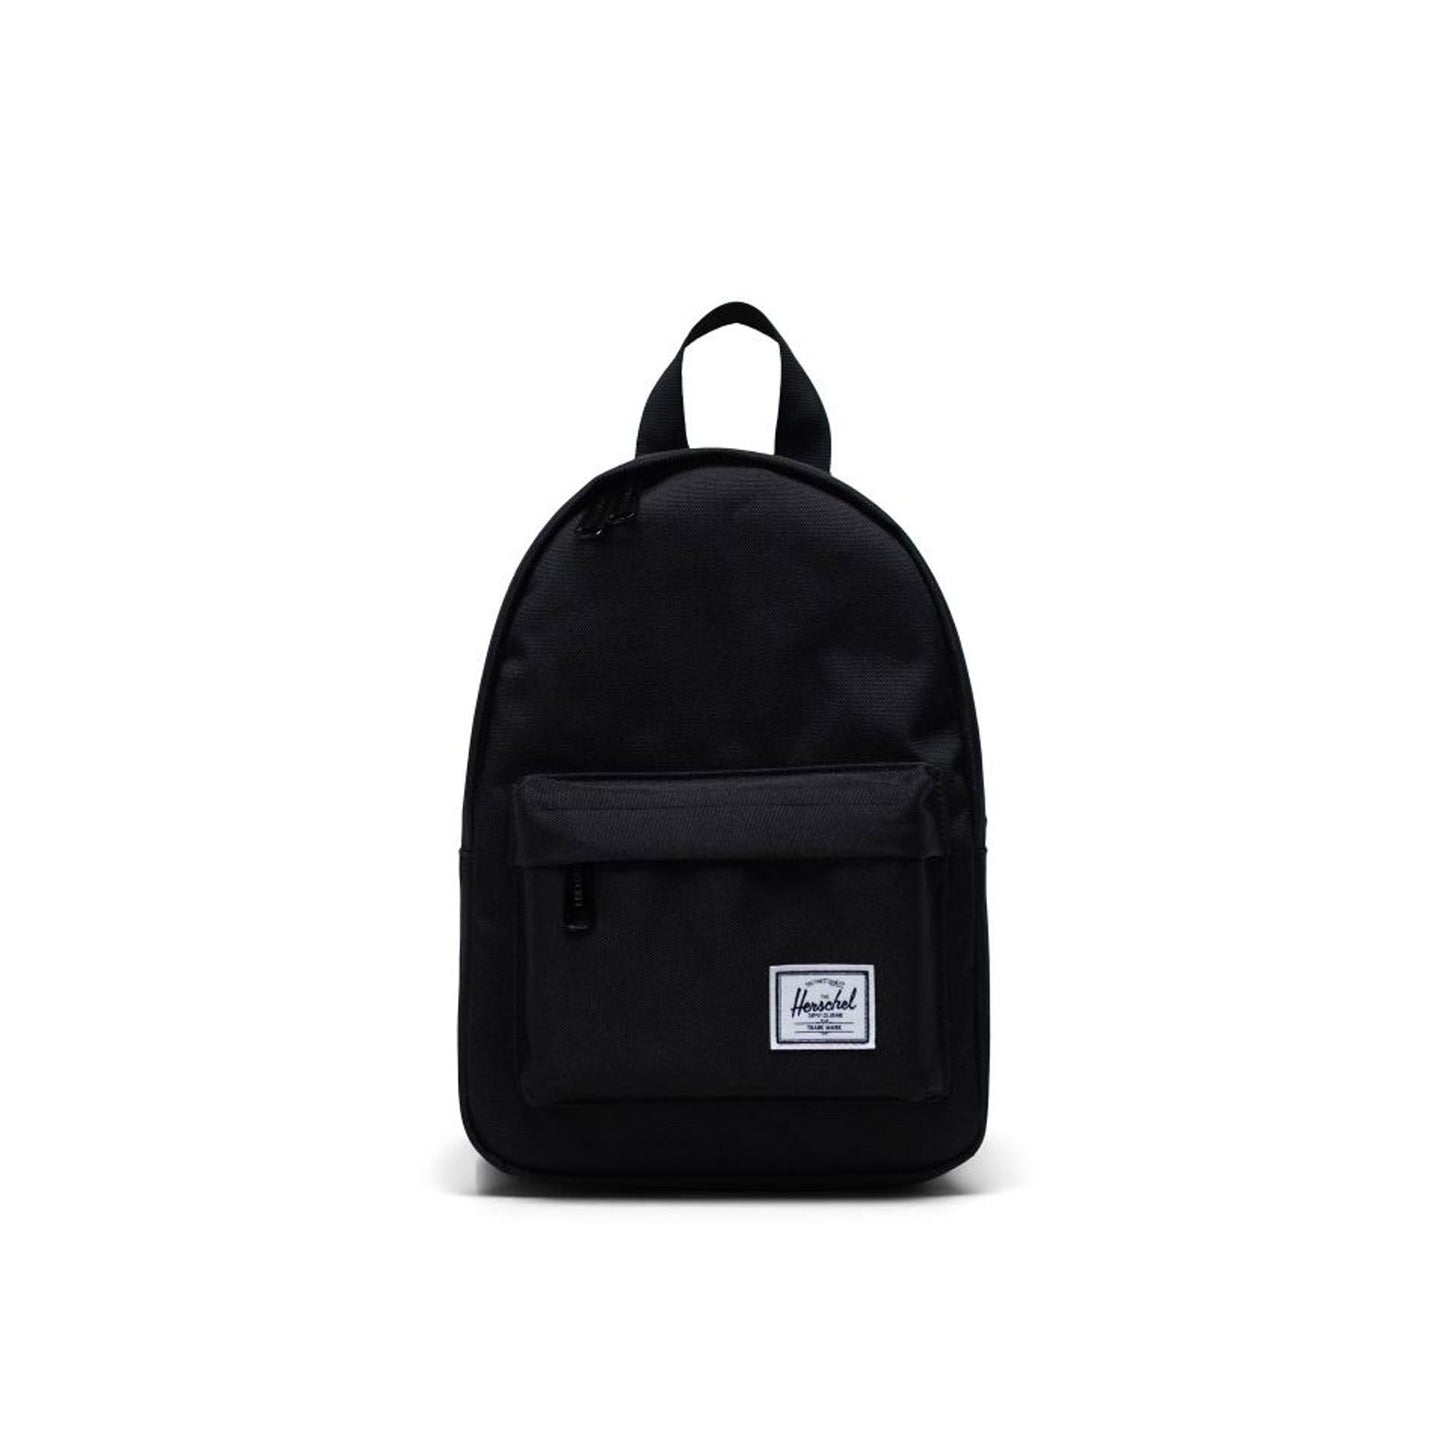 Herschel Classic Mini Backpack, Black